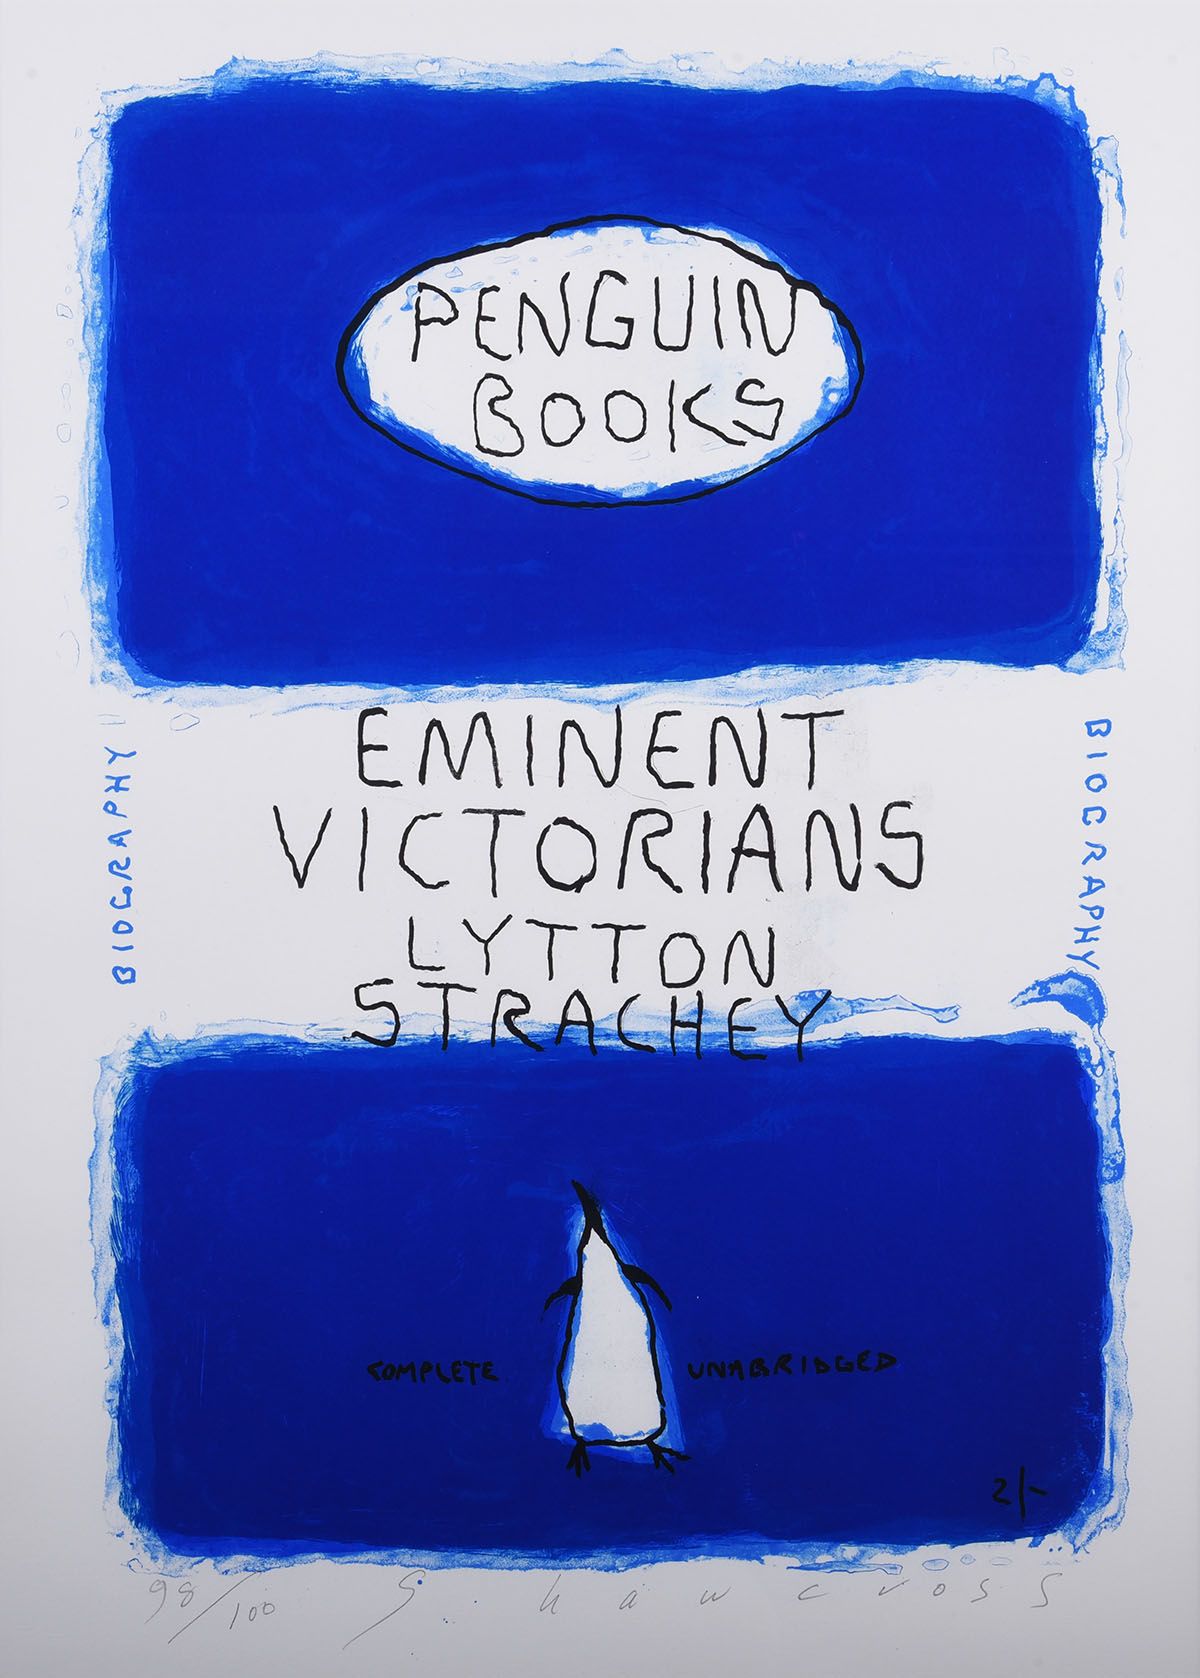 EMINENT VICTORIANS BY LYTTON STRACHEY (PENGUIN BOOK SERIES) by Neil Shawcross RHA RUA at Ross's Online Art Auctions